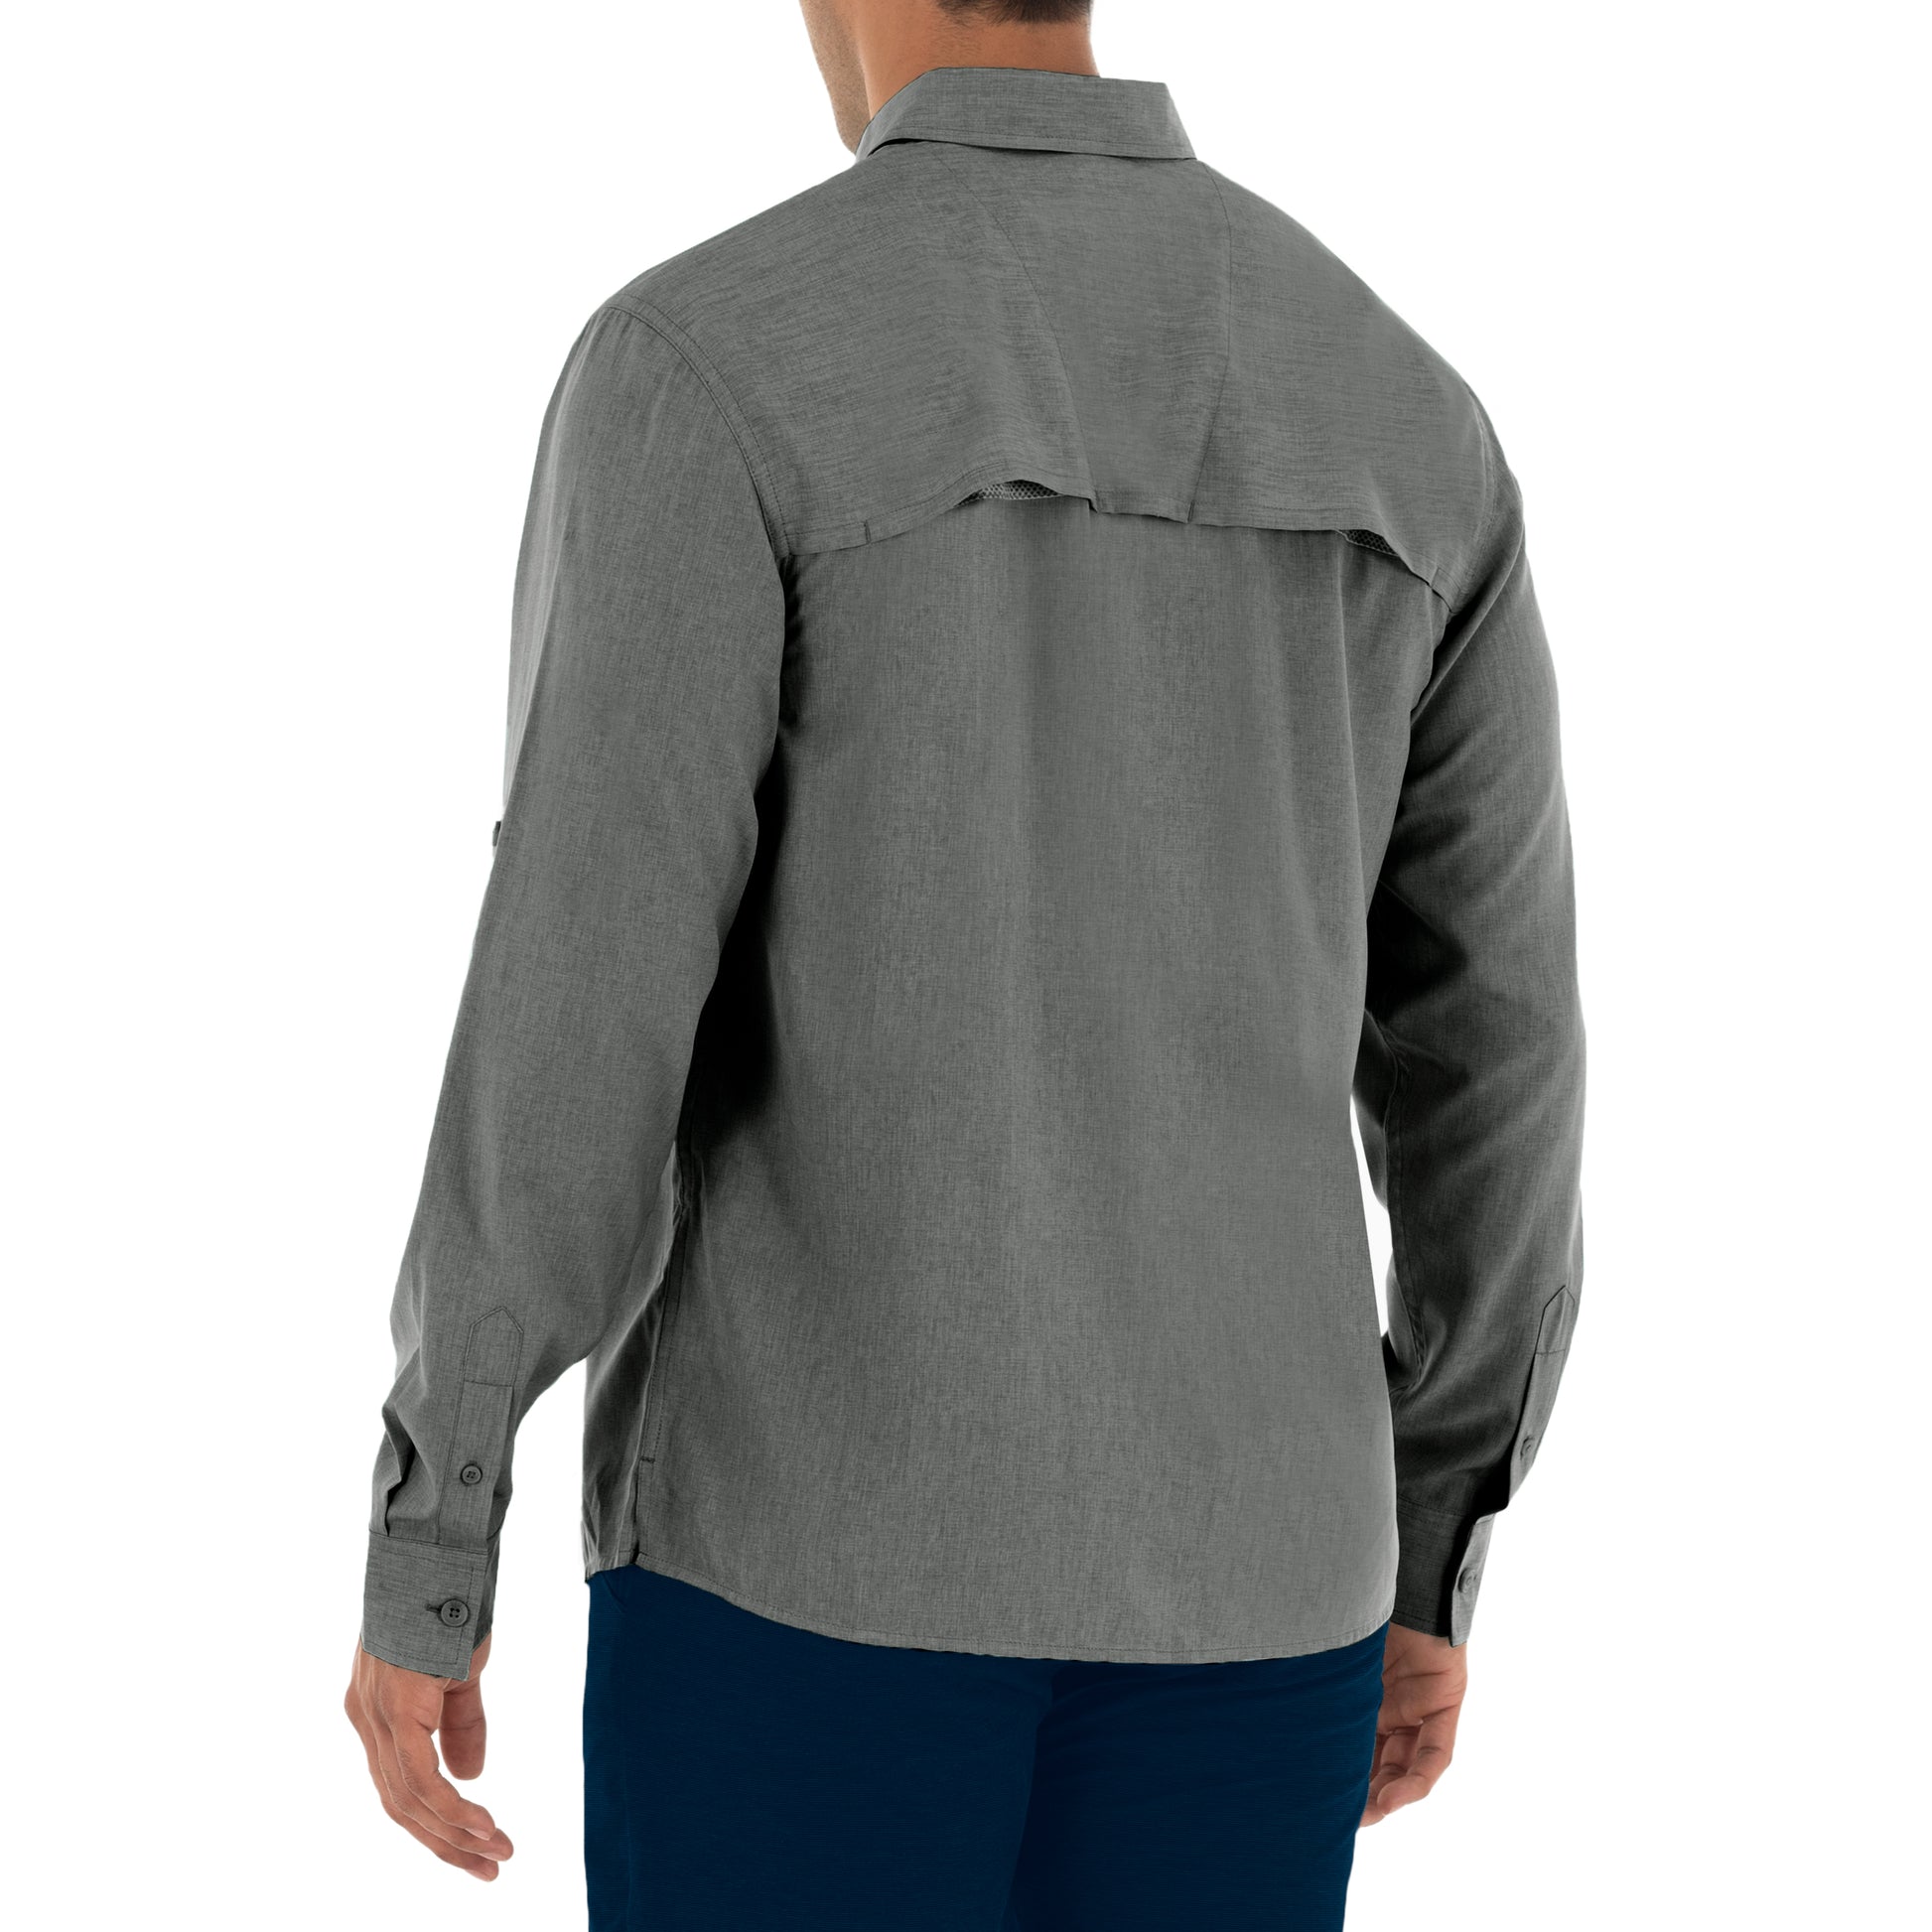 Men's Long Sleeve Heather Textured Cationic Grey Fishing Shirt View 2